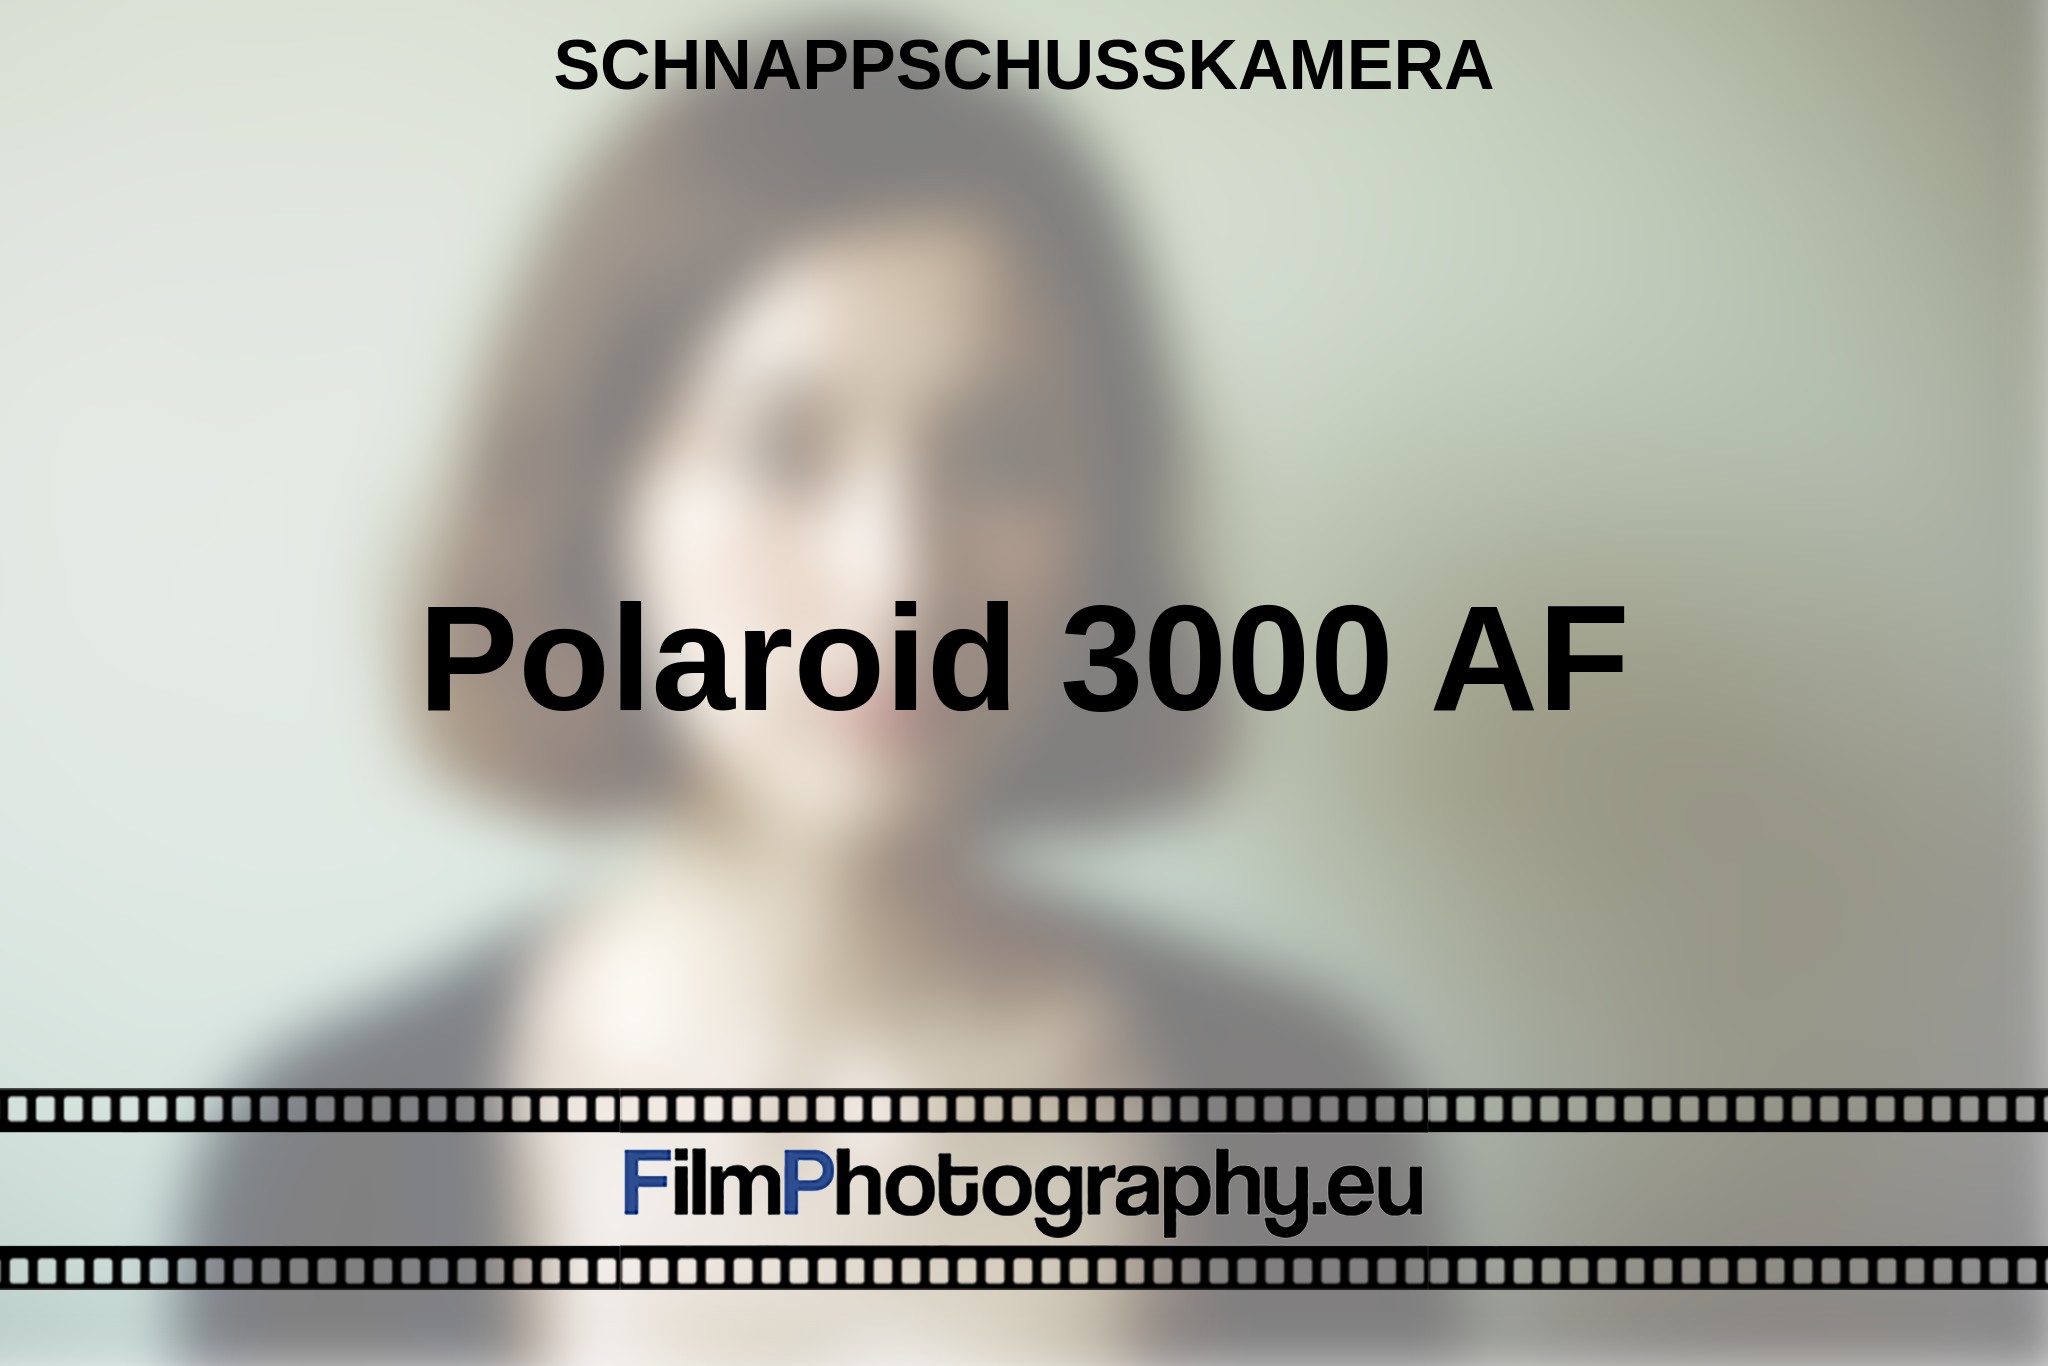 polaroid-3000-af-schnappschusskamera-bnv.jpg